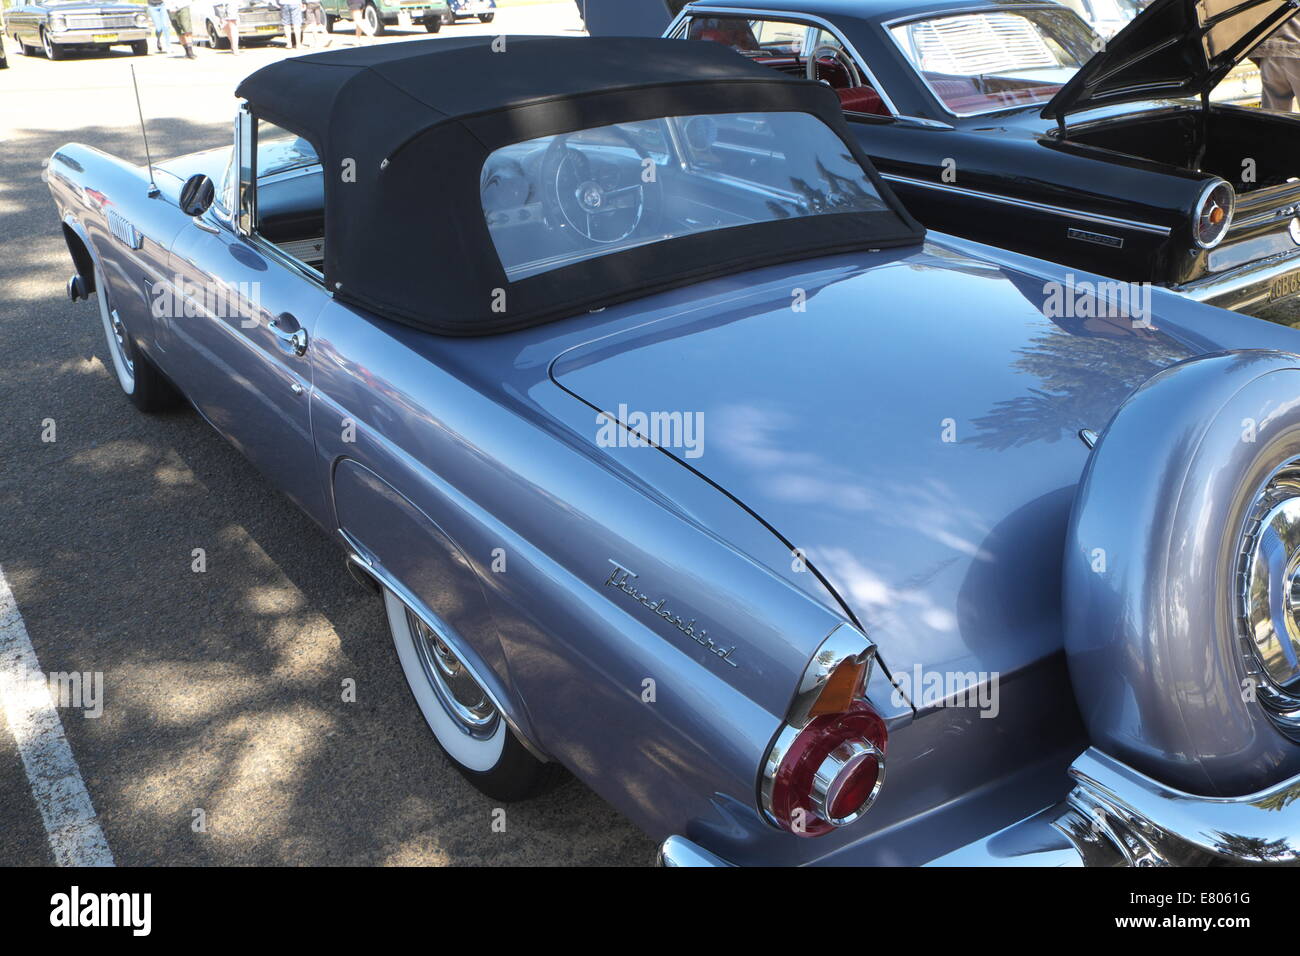 Newport Beach, Sydney, Australia. 27th Sep, 2014. Classic cars on display at Sydney's Newport Beach. Here a classic Ford Thunderbird. Credit:  martin berry/Alamy Live News Stock Photo